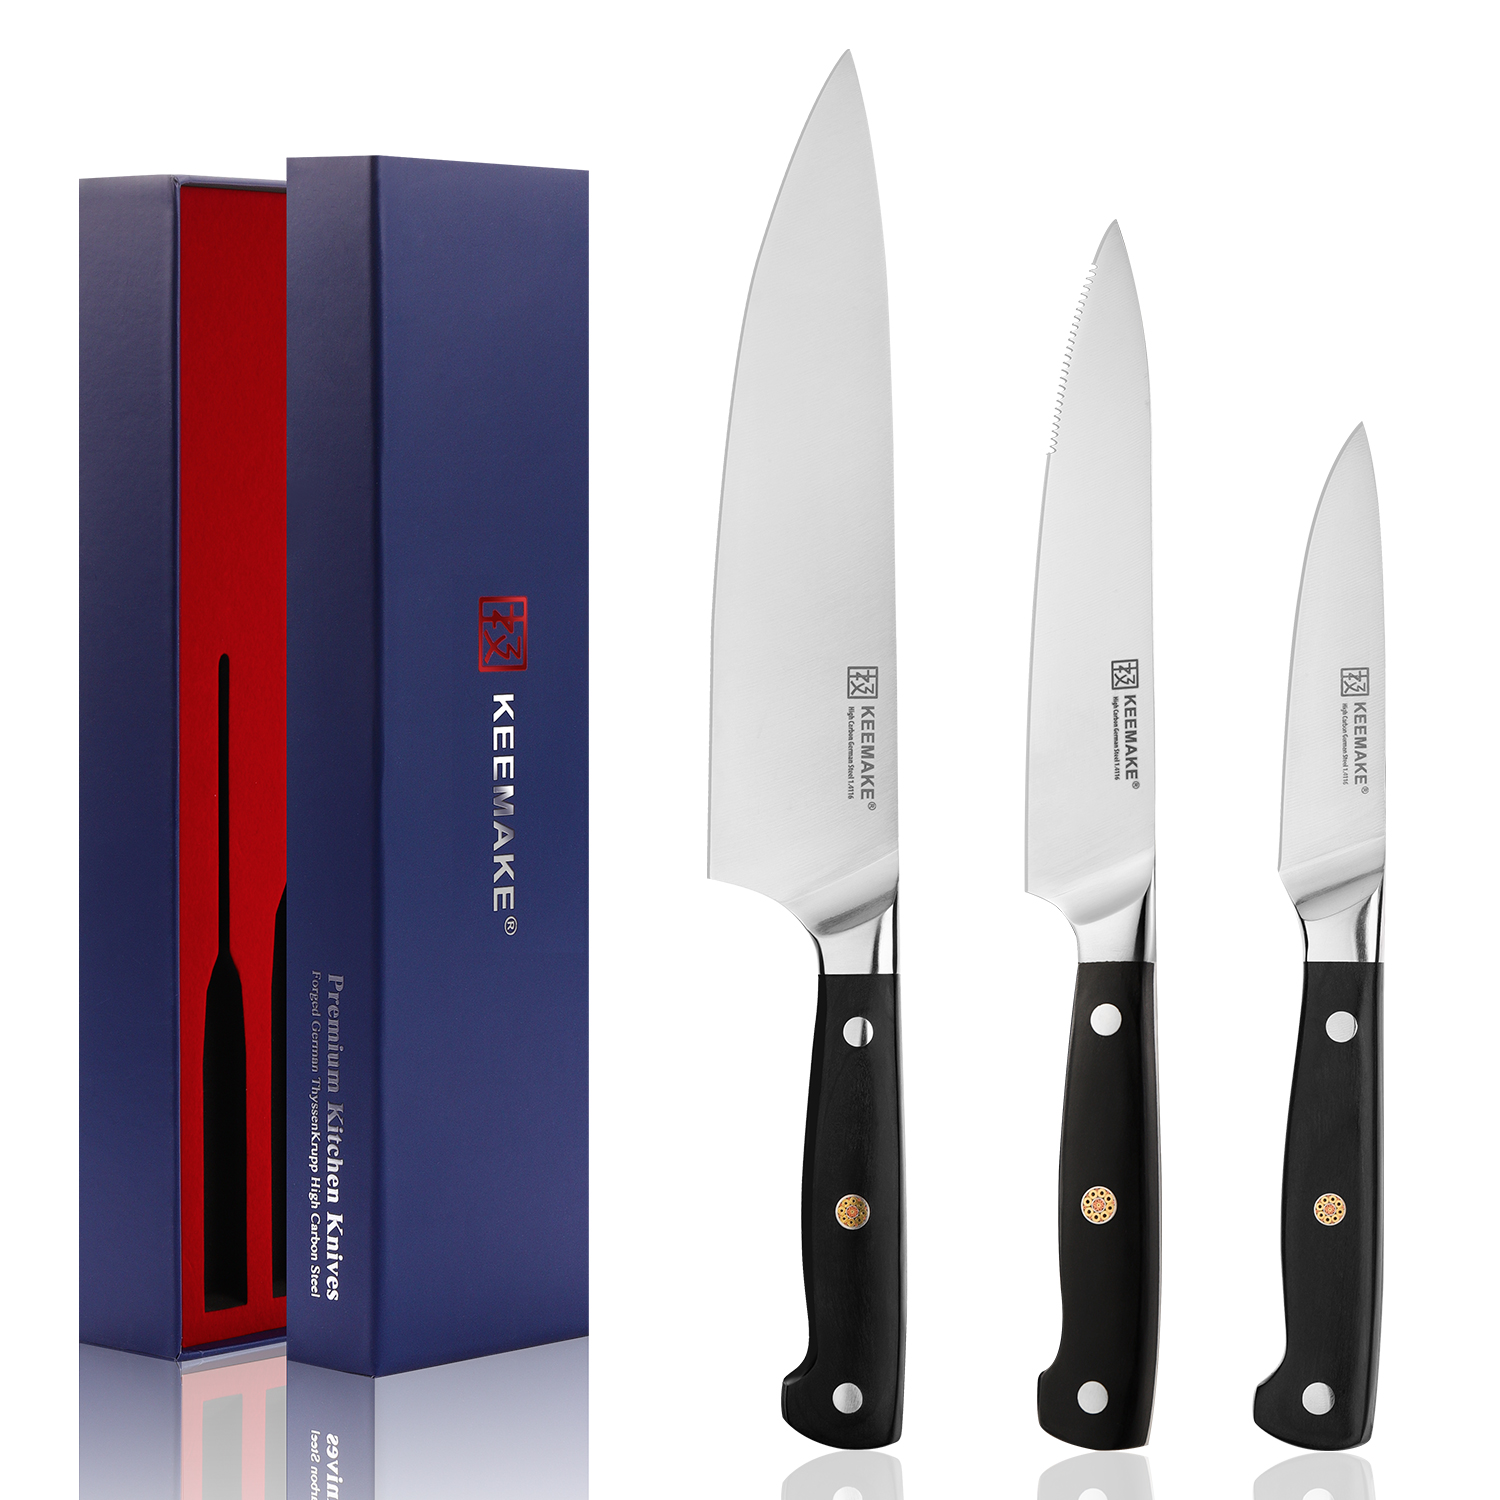 KEEMAKE-3pcs Kitchen Knife Set With Blue Gift Box